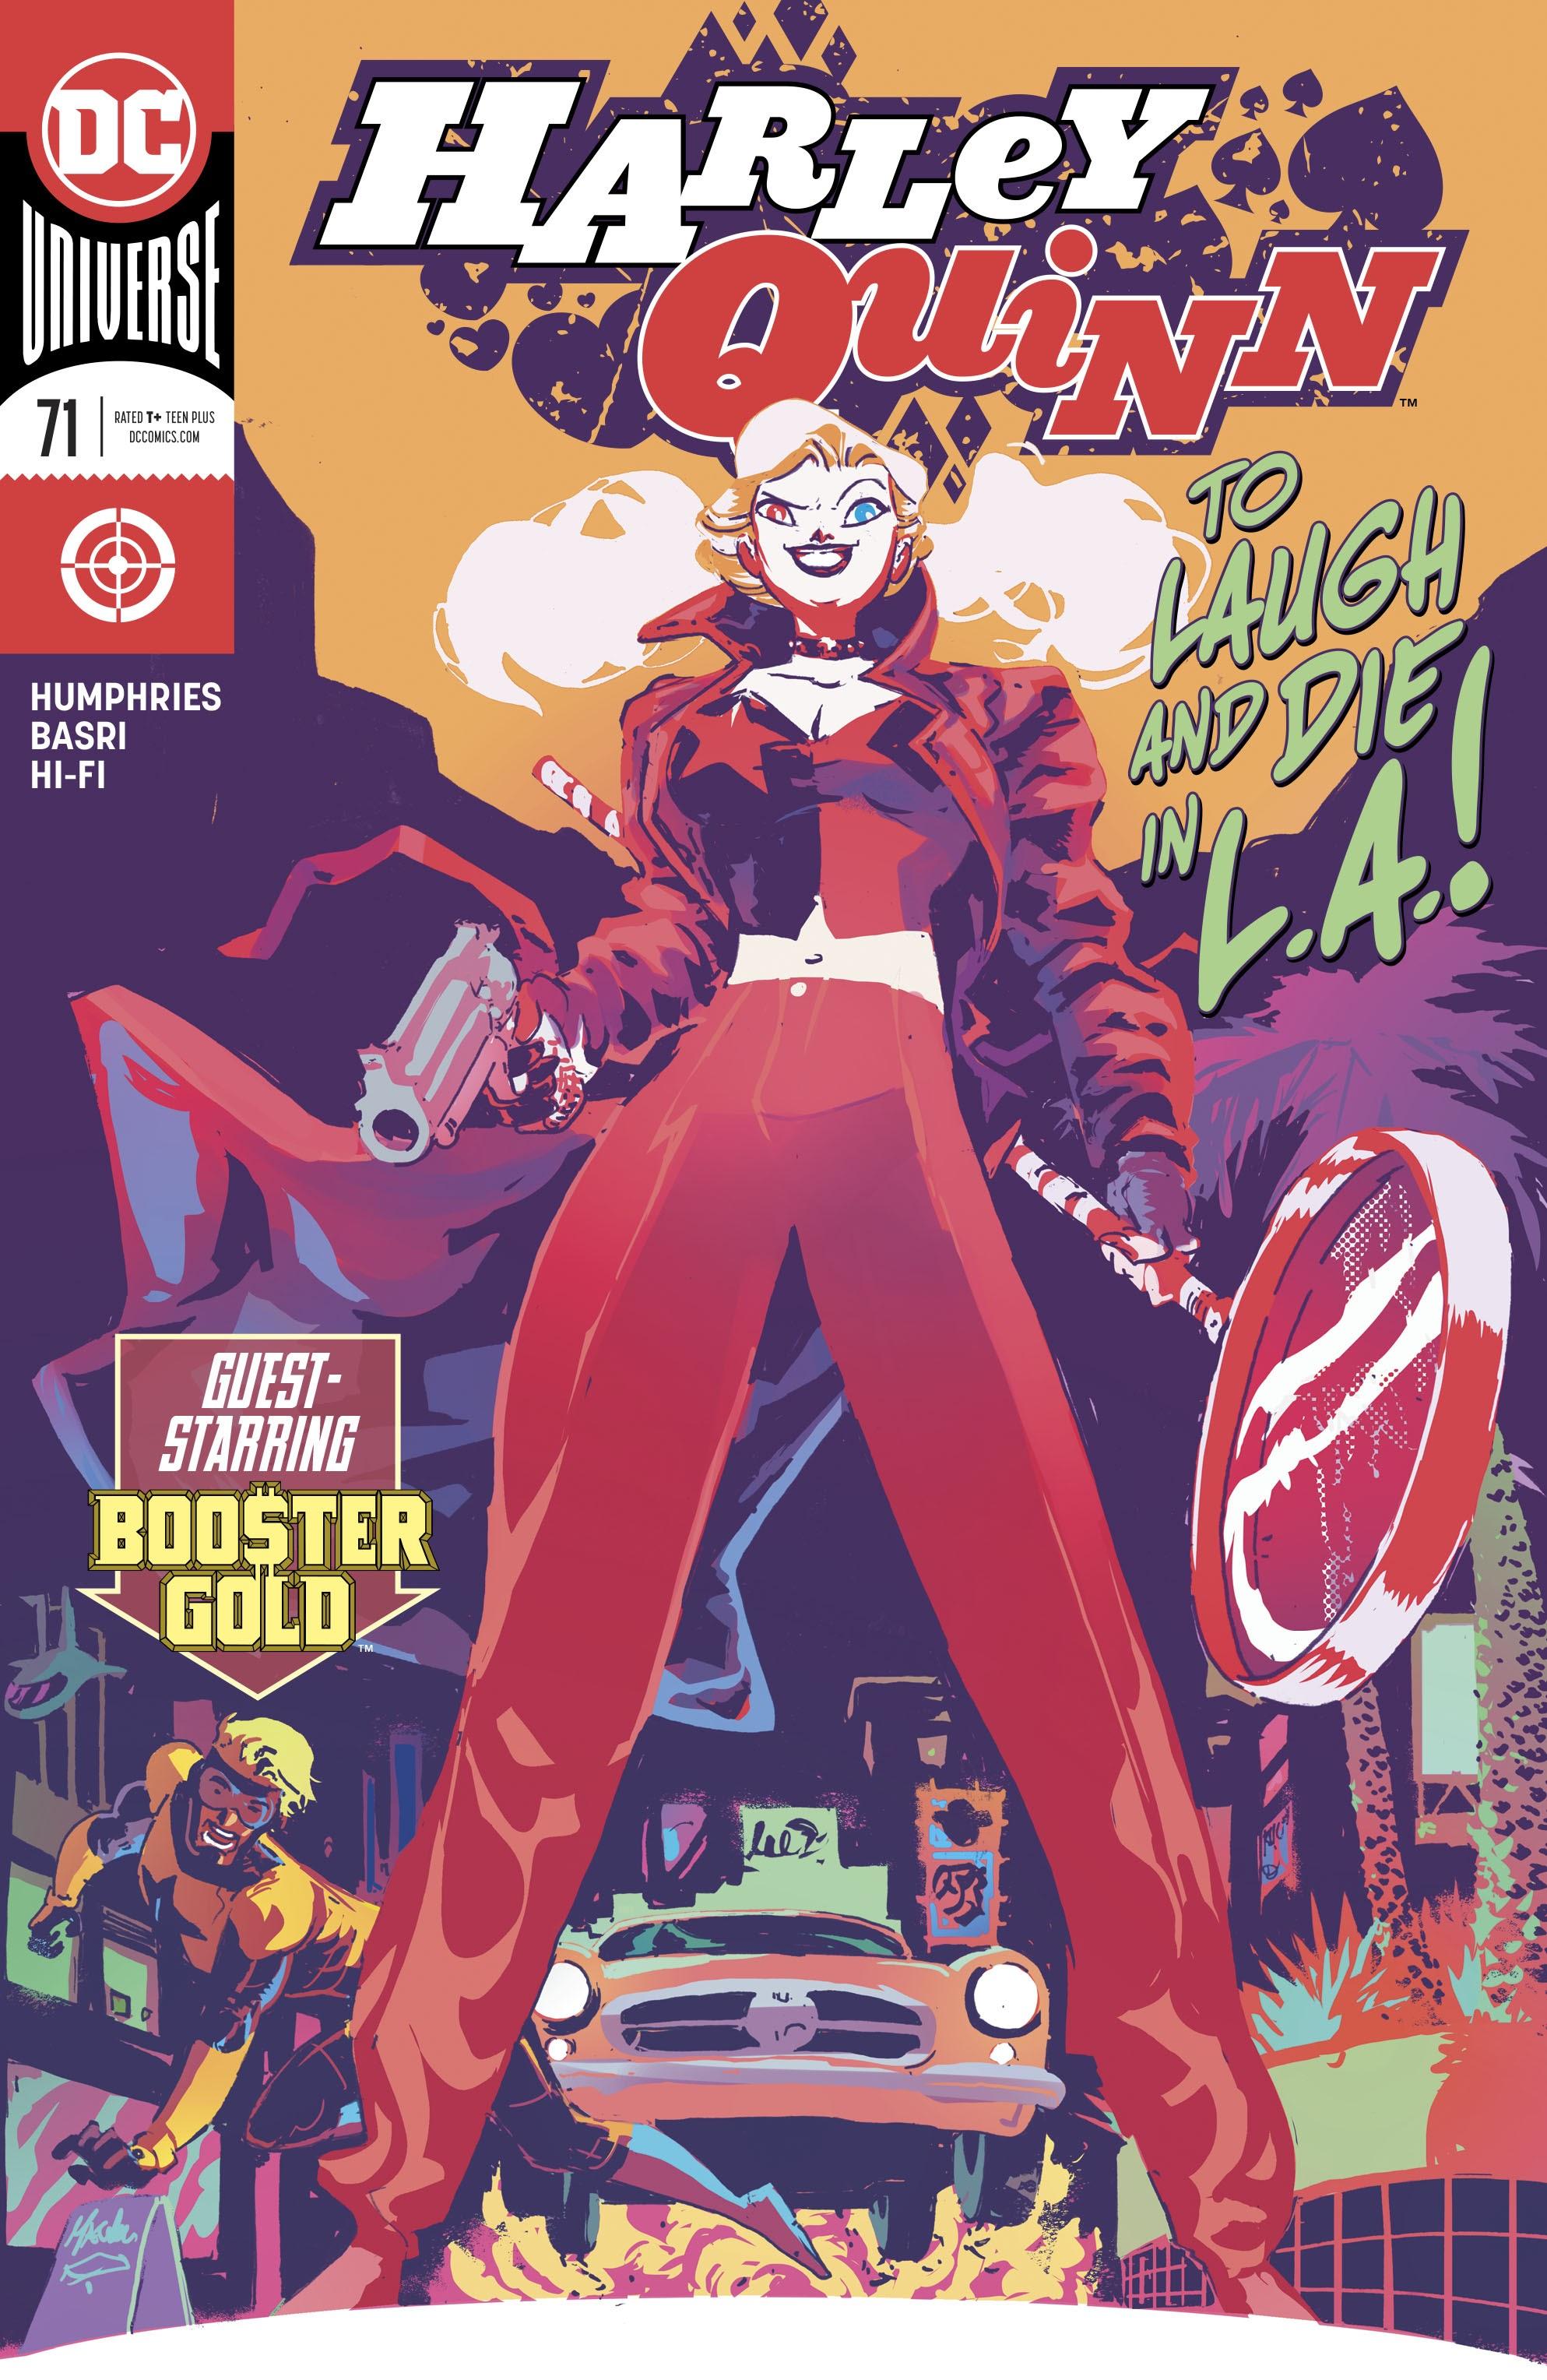 Harley Quinn Vol. 3 #71